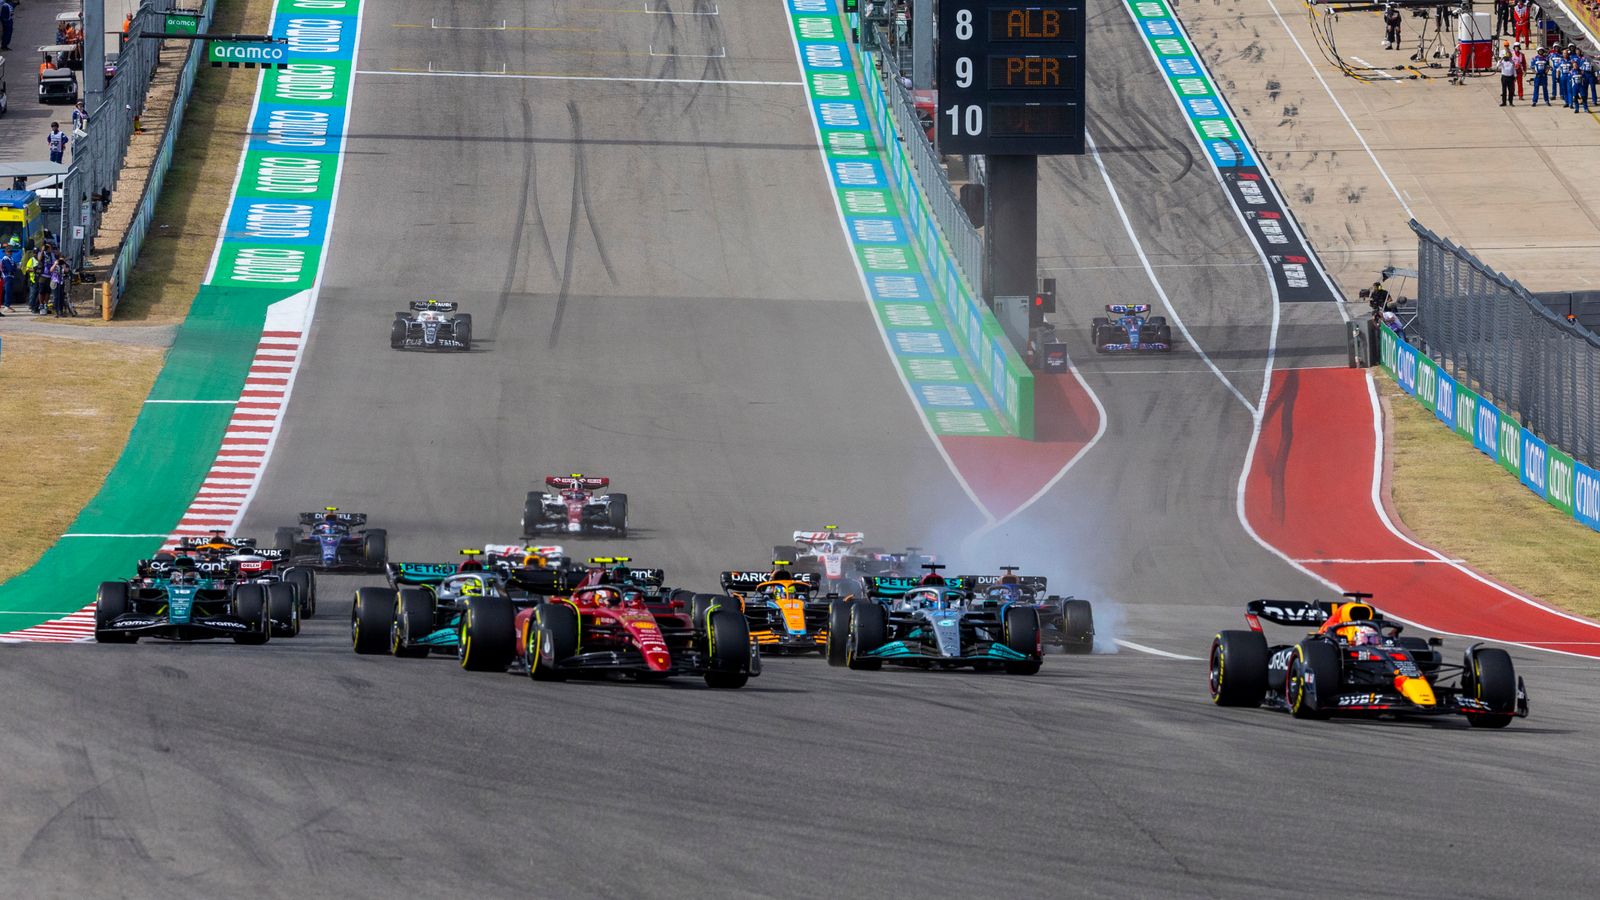 Austin, Qatar, Spa among first-time Sprint hosts for 2023 F1 season